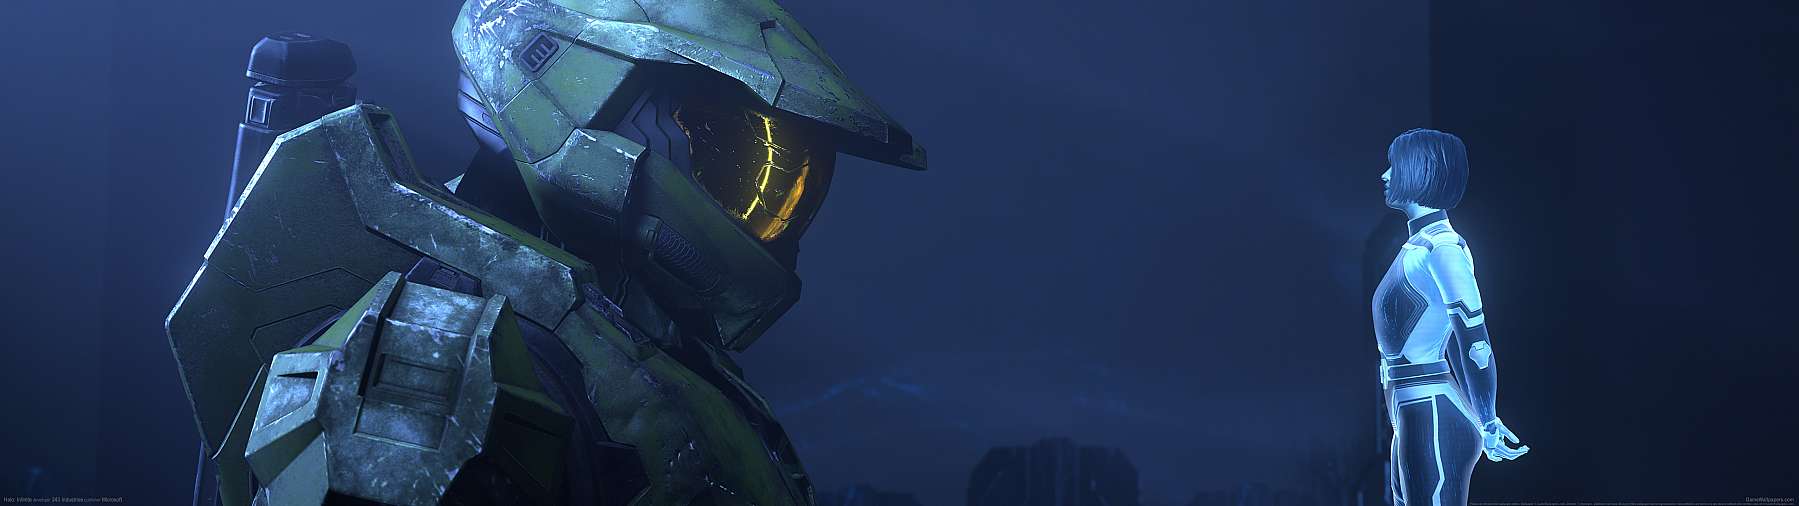 Halo: Infinite superwide achtergrond 10